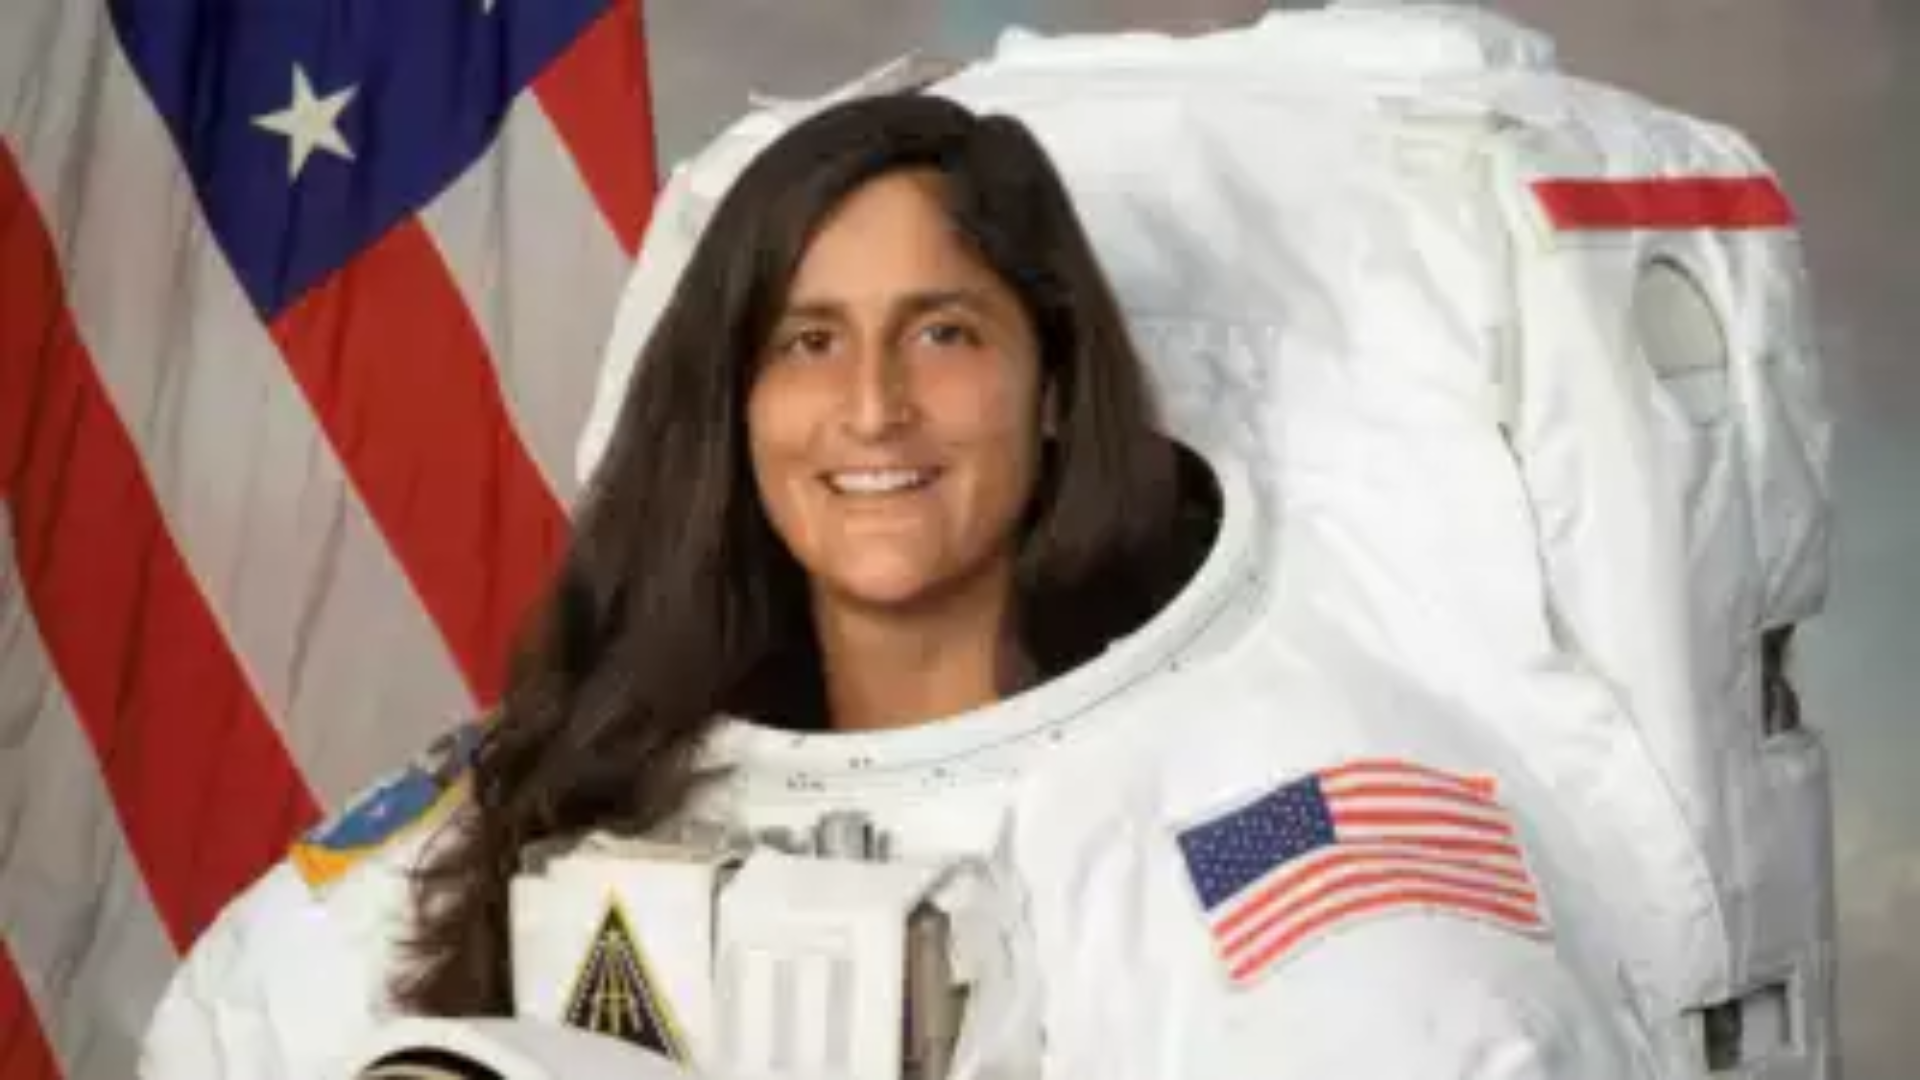 Sunita Williams’s Space Mission Extended Despite ‘Superbug’ Reports